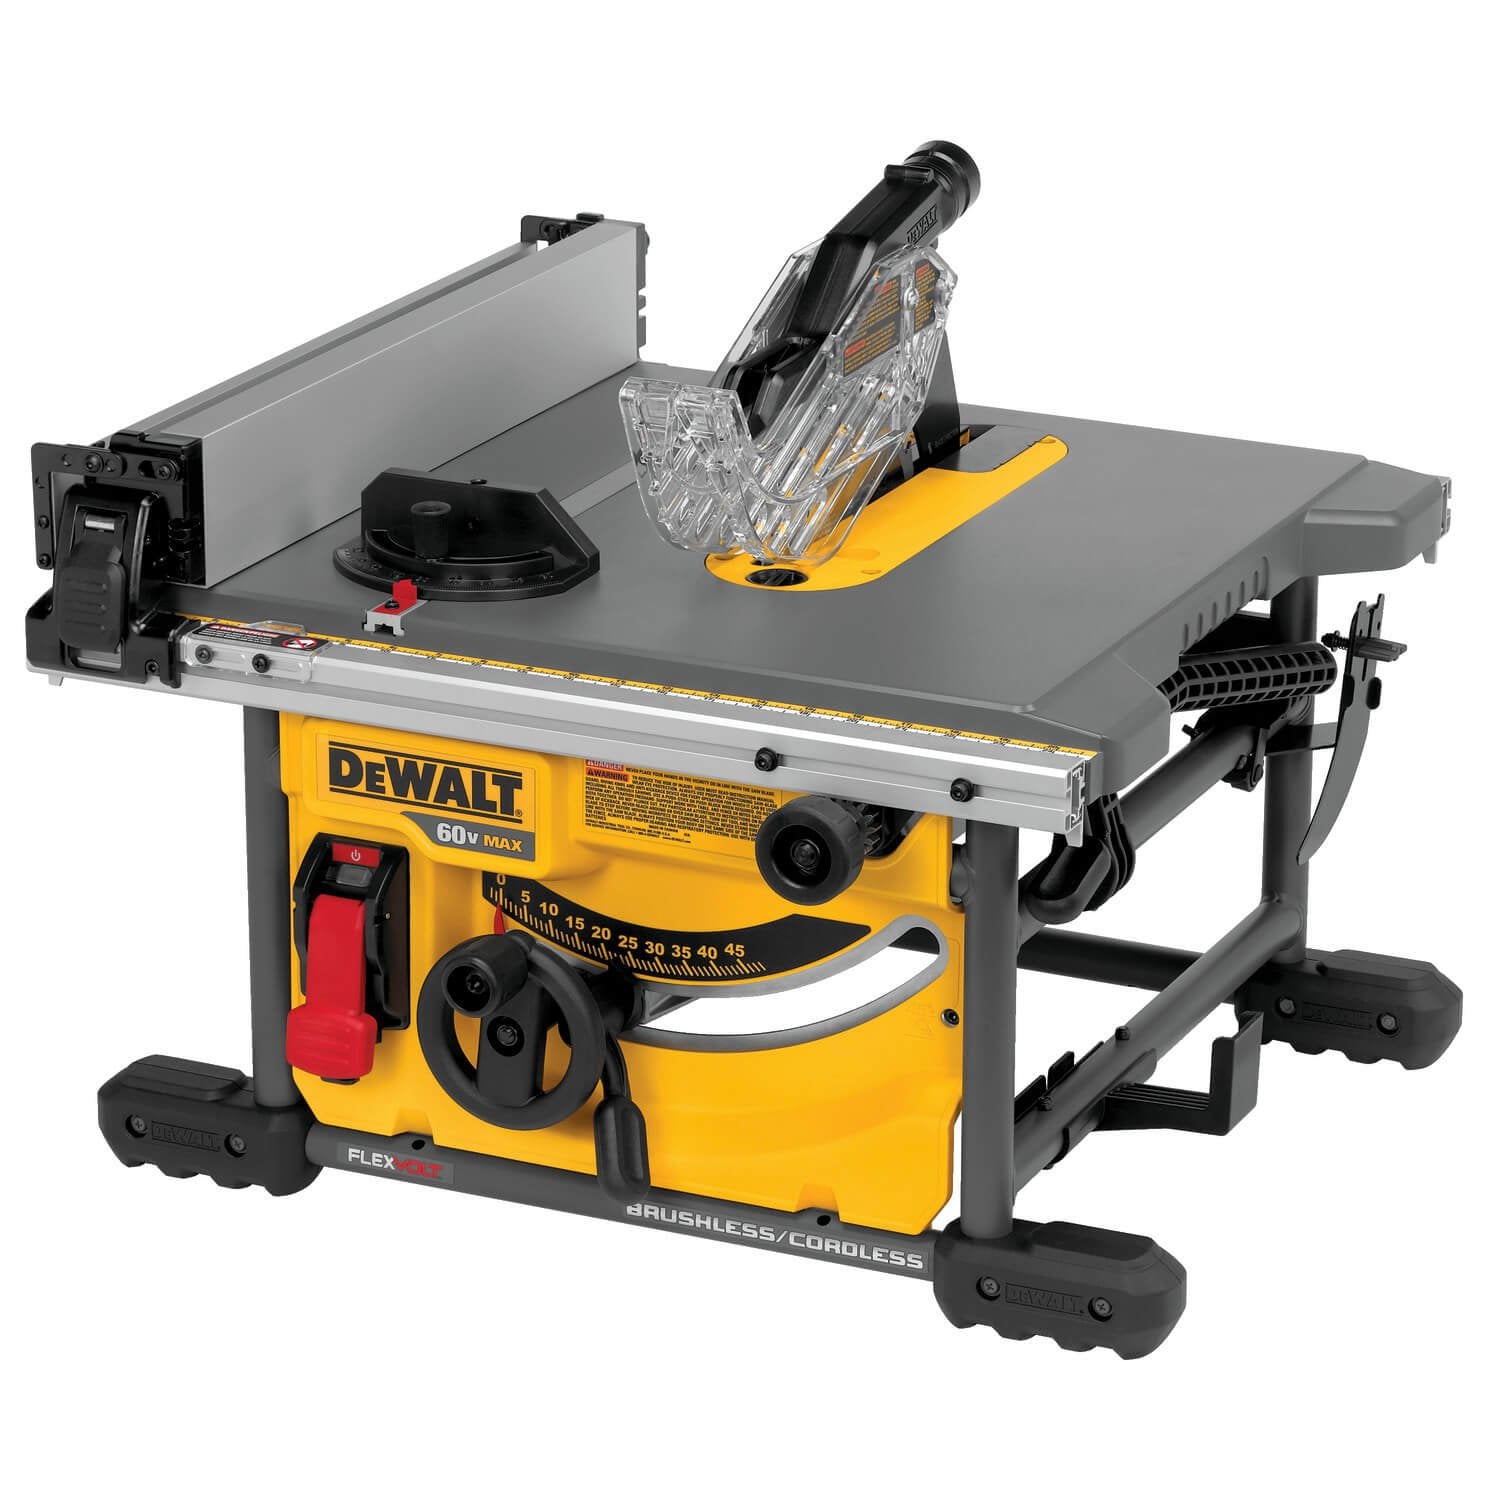 Dewalt DCS7485T1 - 60V MAX FLEXVOLT 8 1/2" TableSaw Kit w 1 - 6Ah Bat